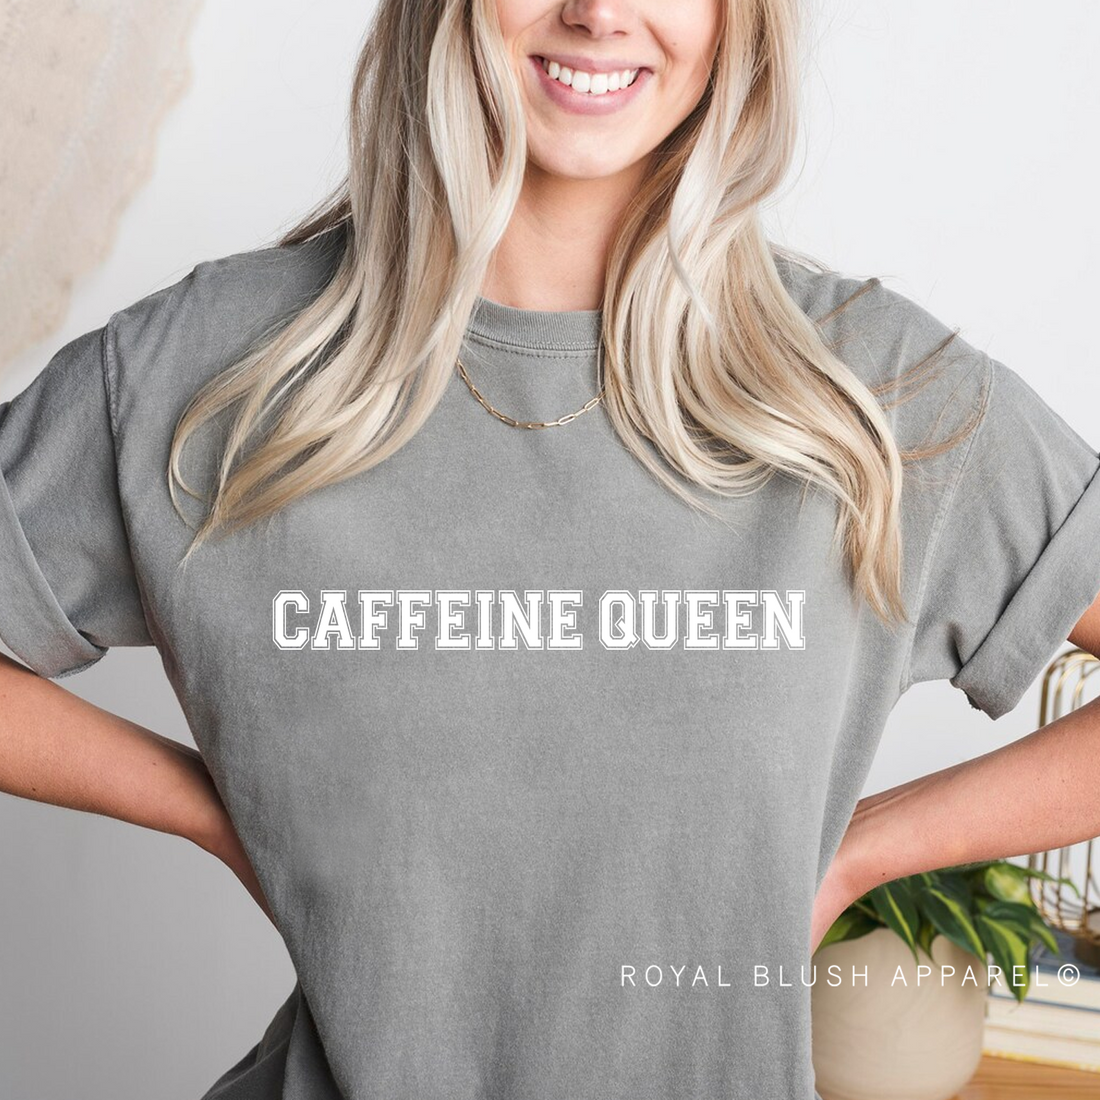 Transfert de sérigraphie Caffeine Queen